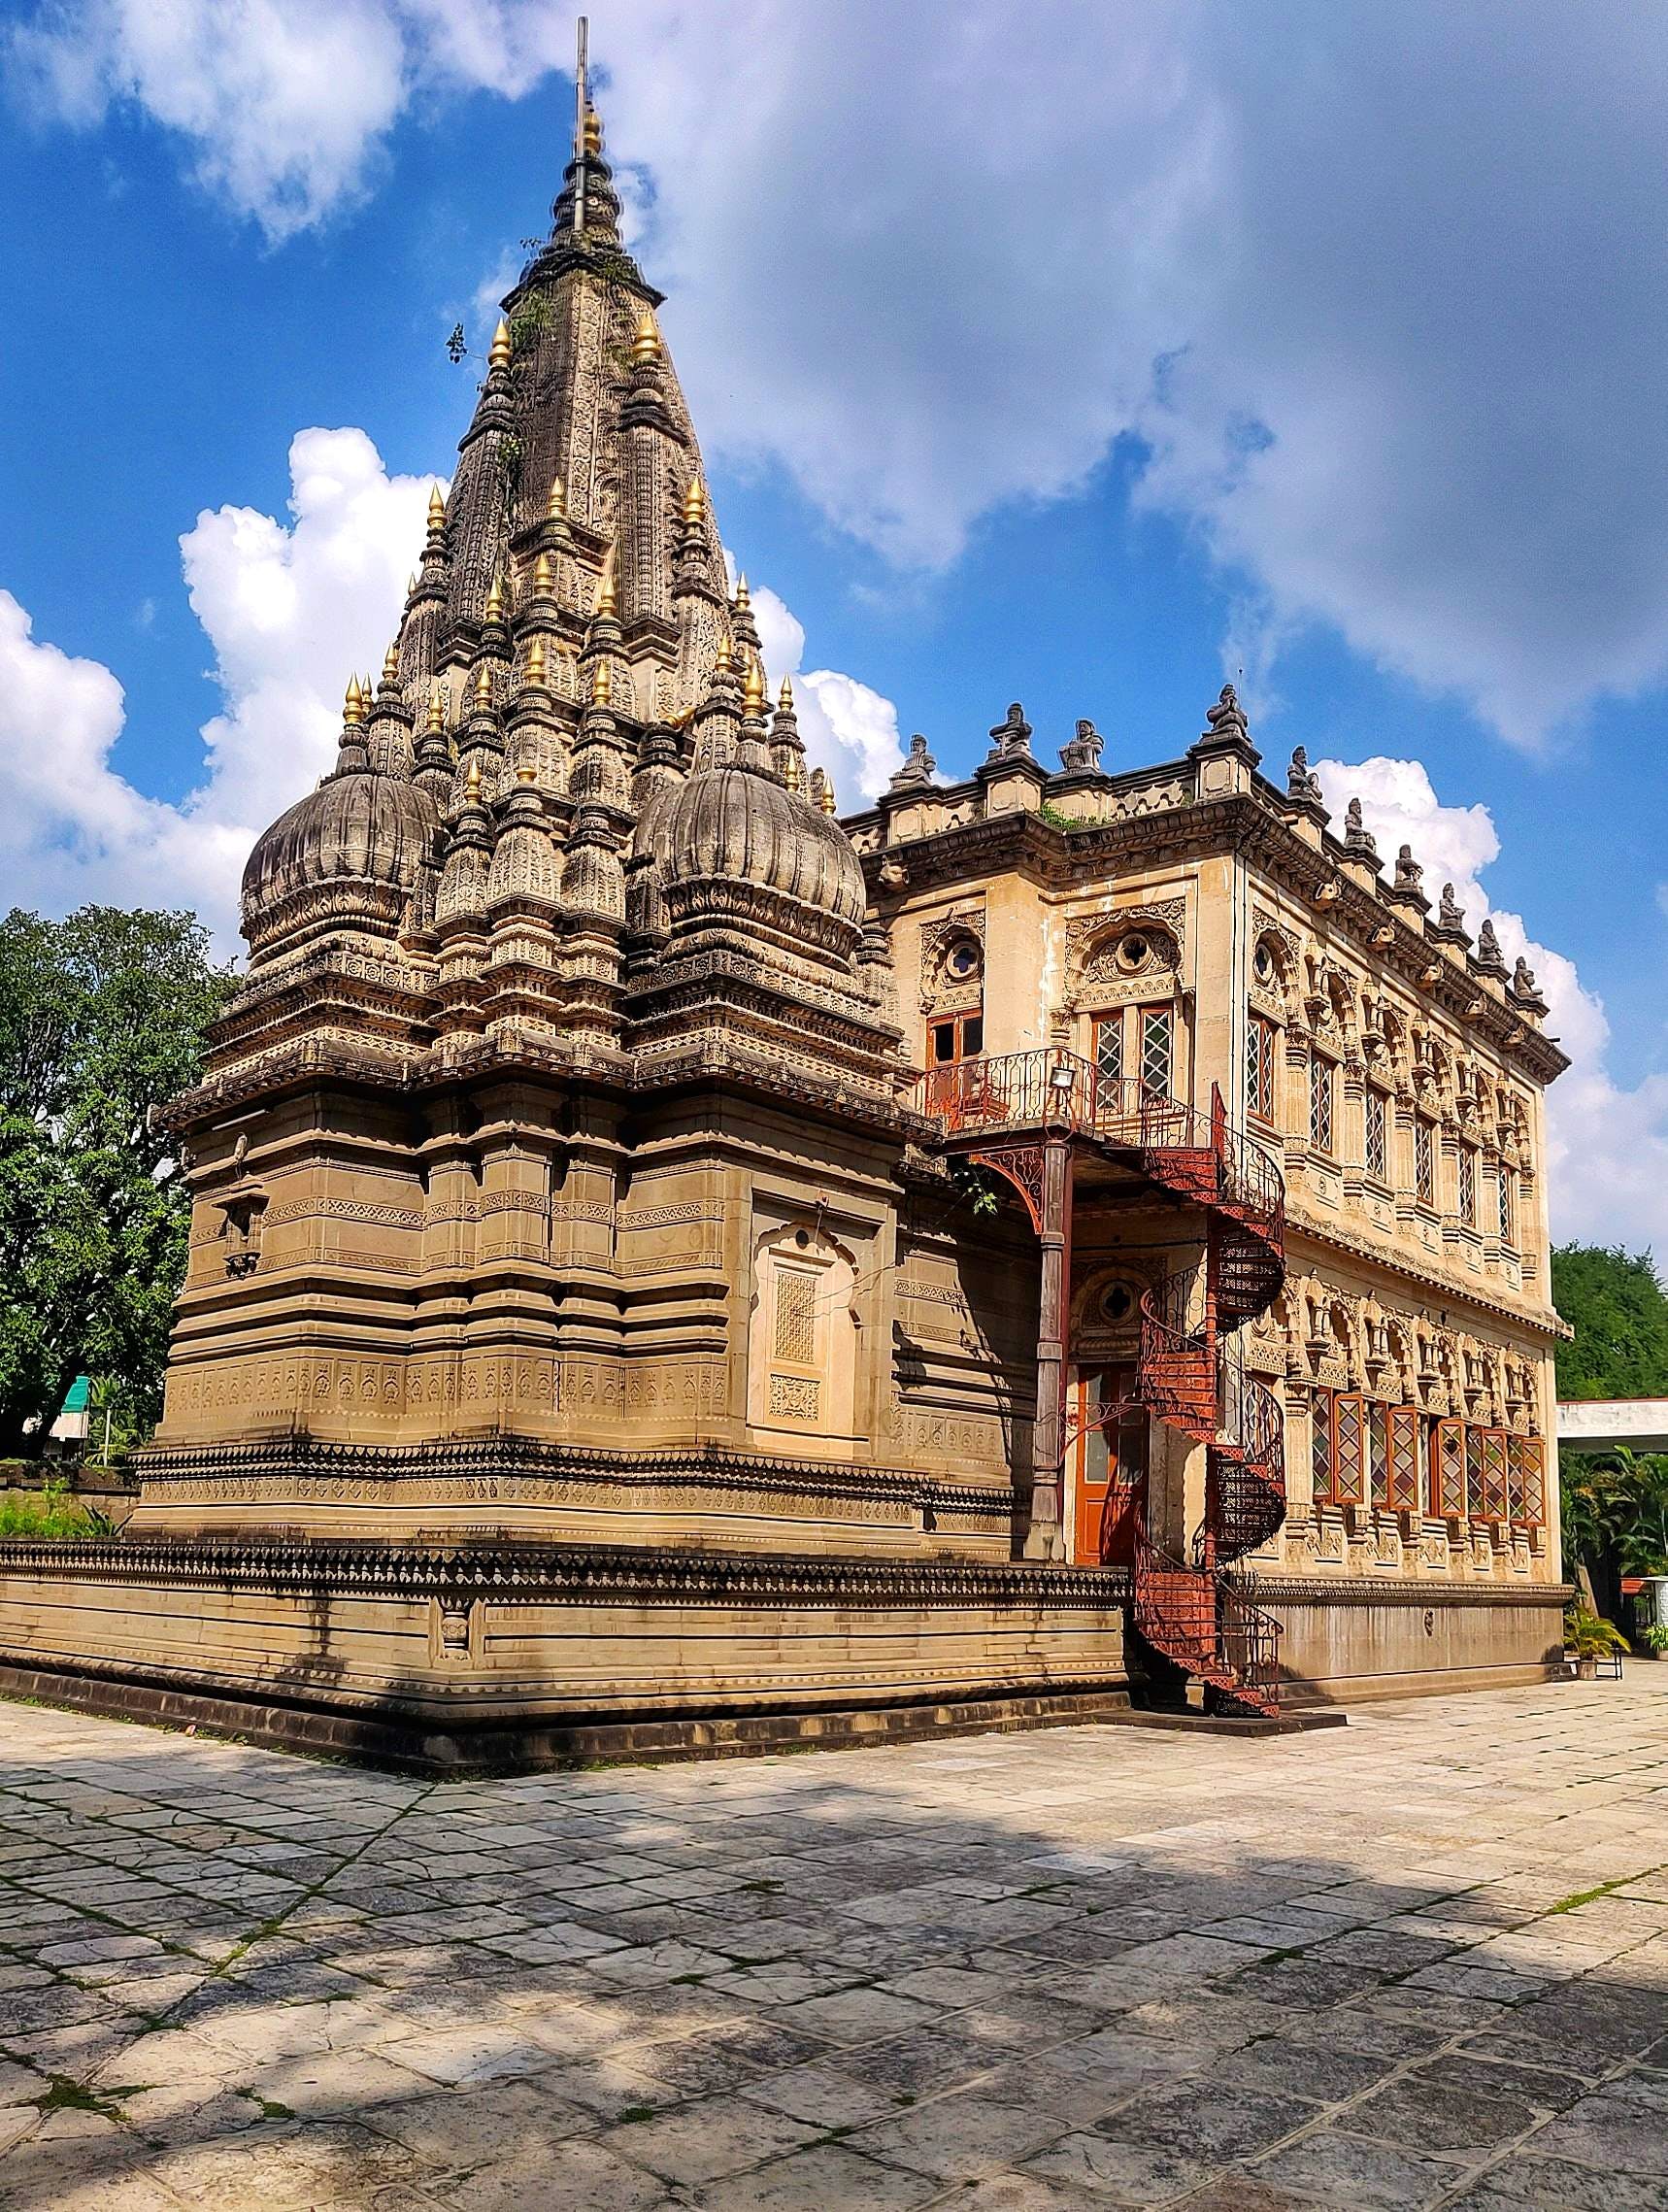 Temple,Hindu temple,Place of worship,Sky,Historic site,Landmark,Building,Architecture,Temple,Cloud